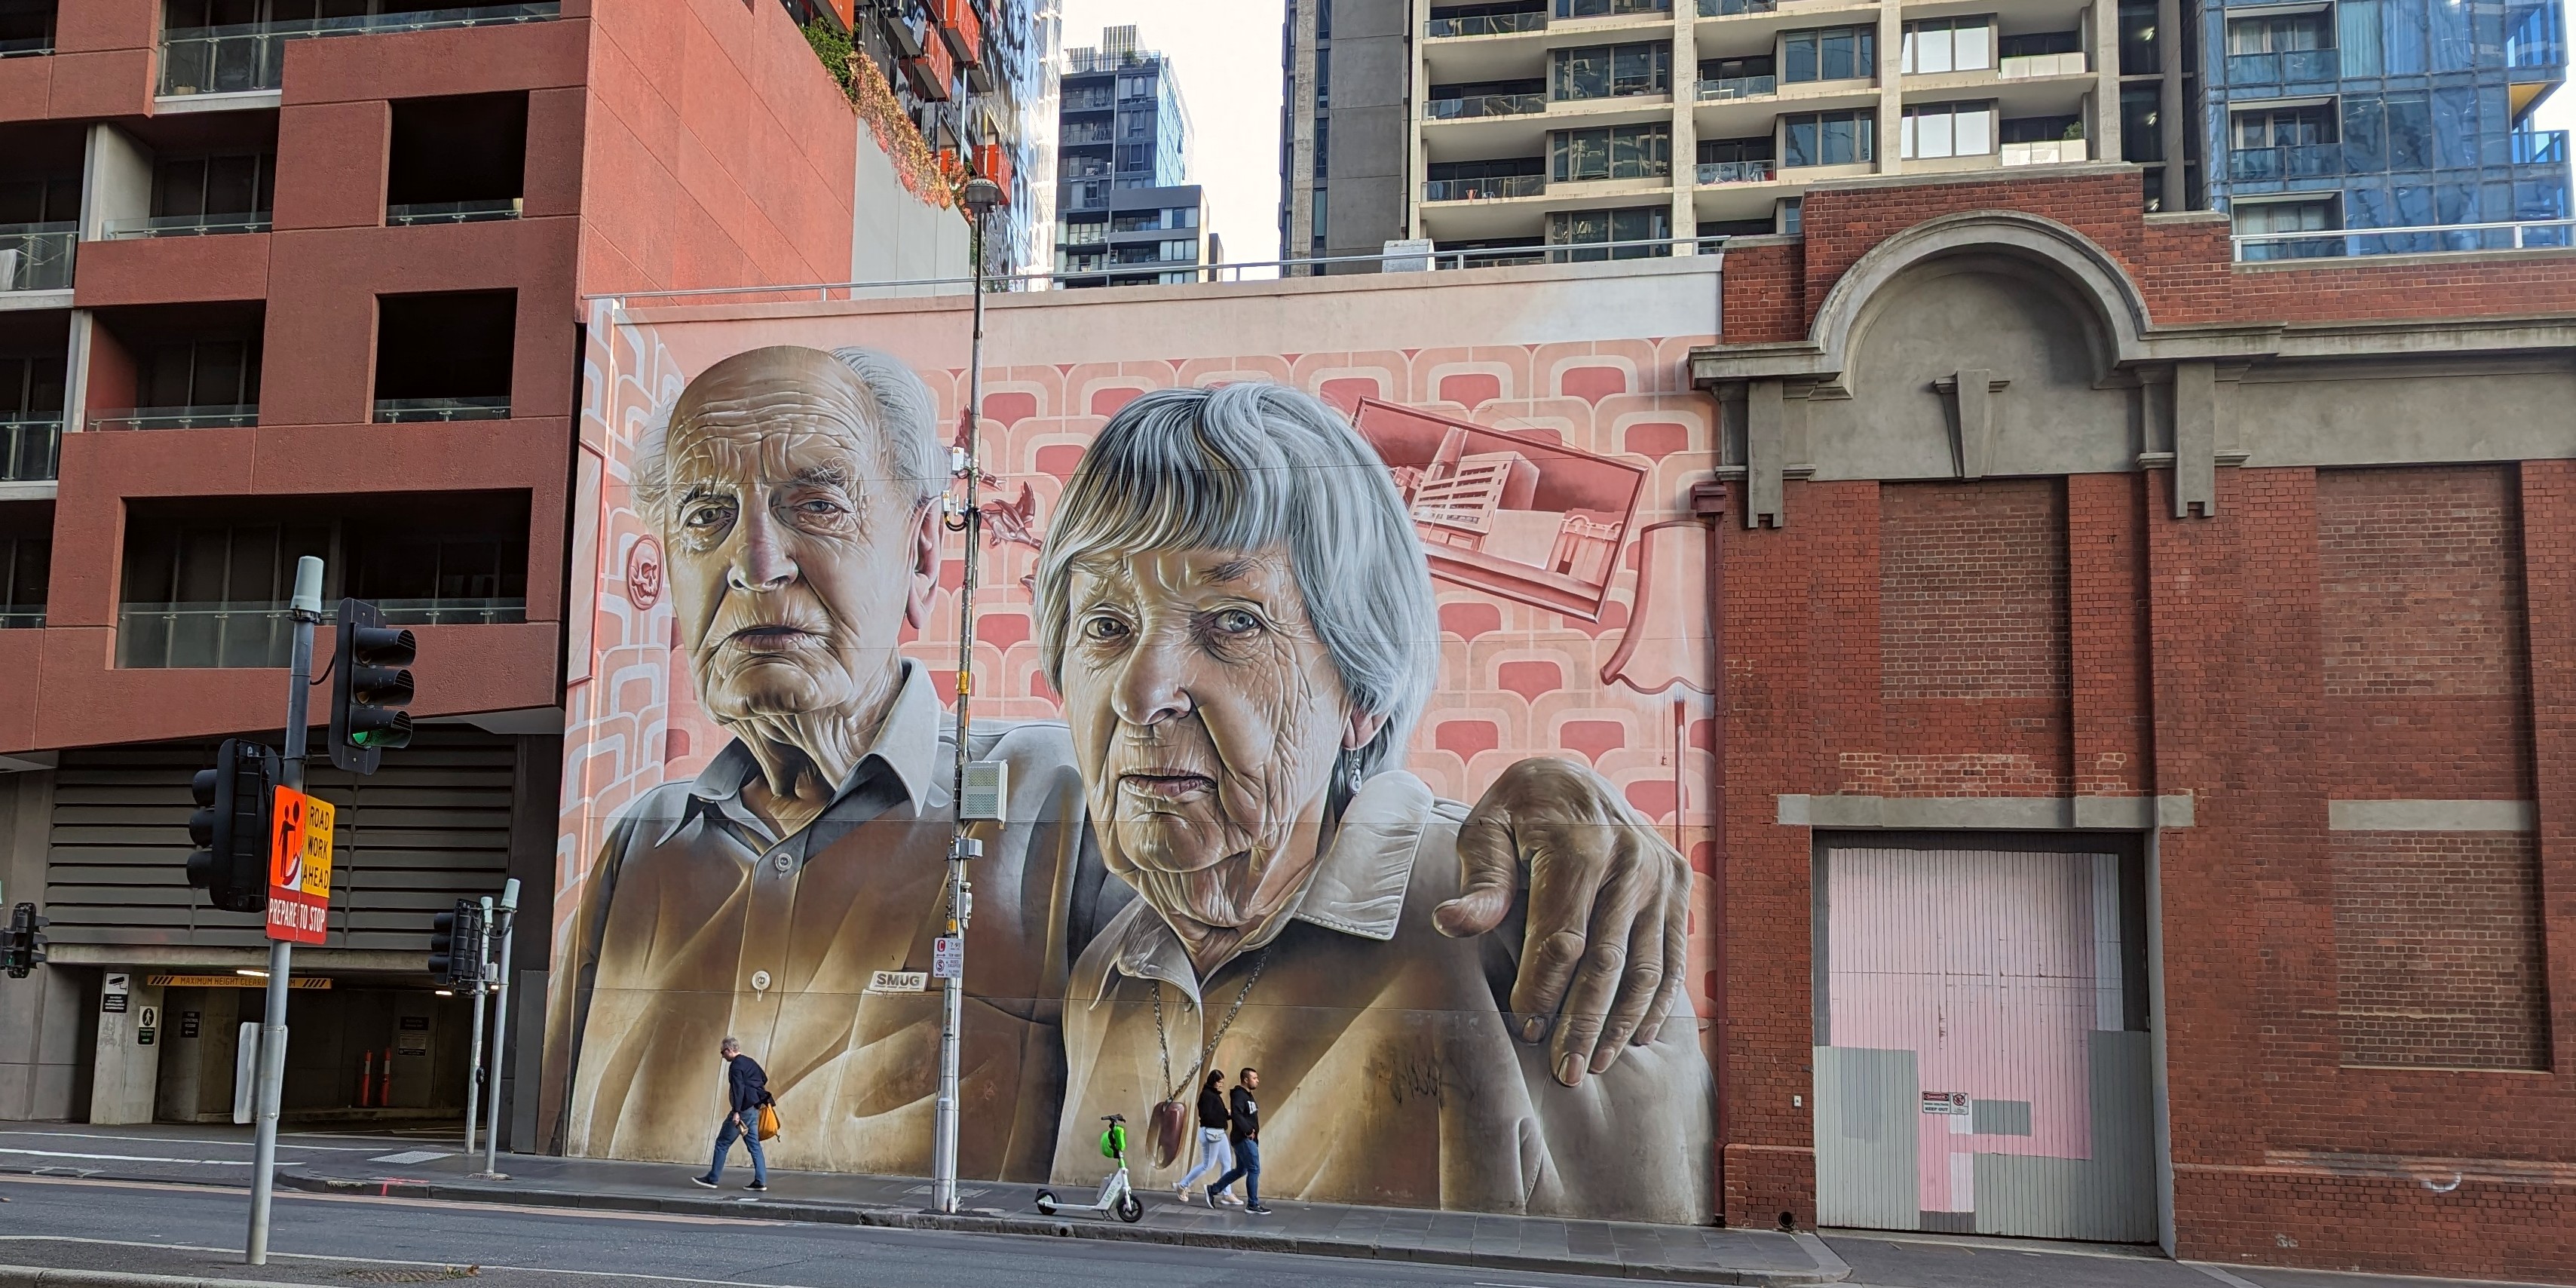 Older walkers are very over-represented in pedestrian trauma statistics in Victoria, Australia